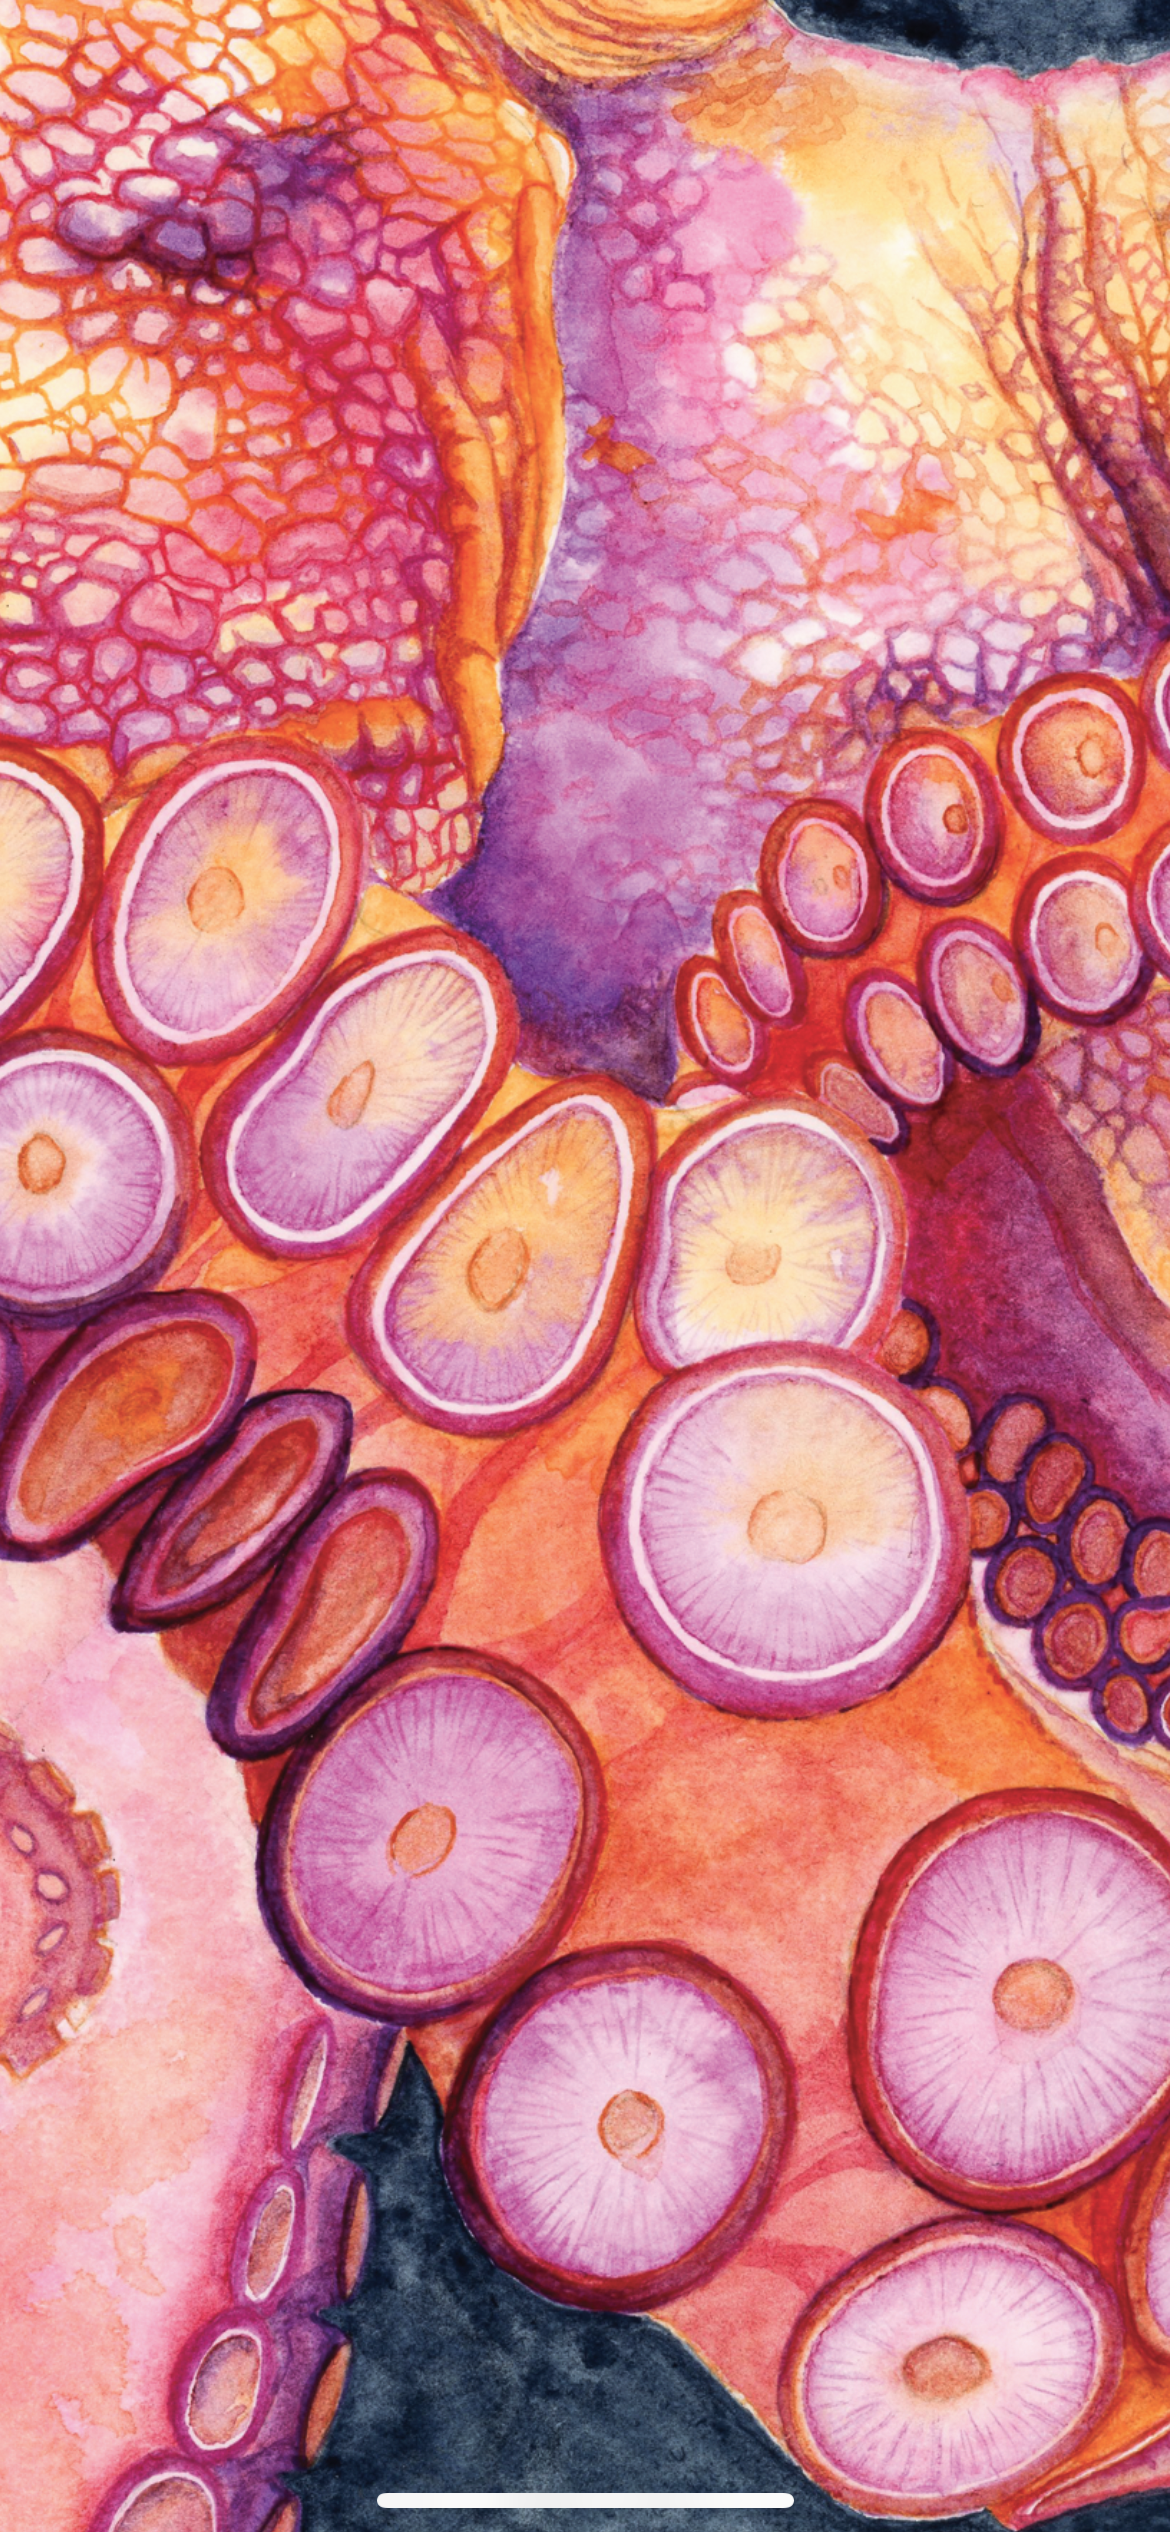 Giant Pacific Octopus Art Print